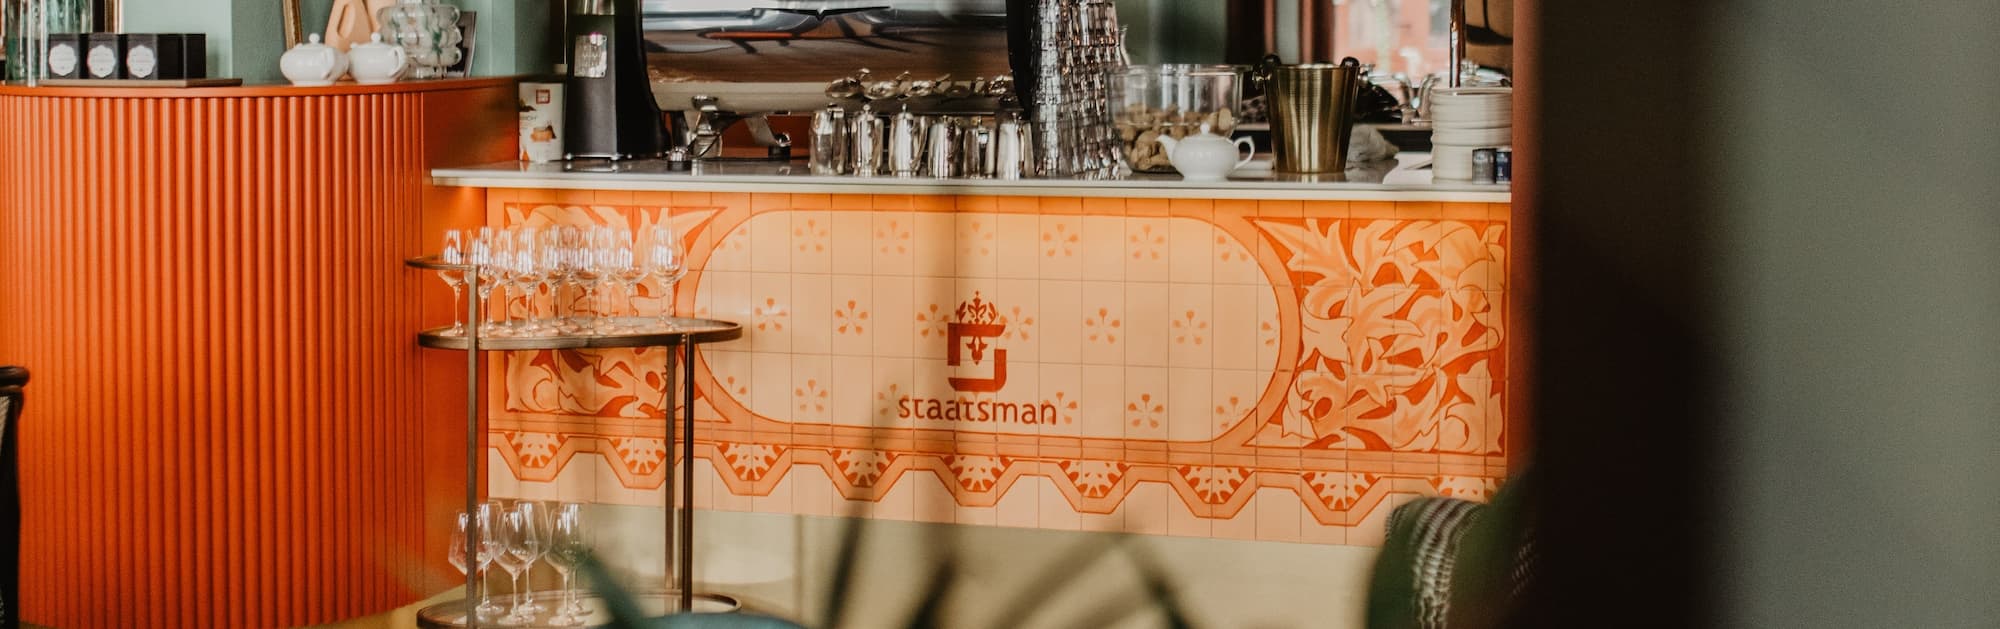 Sneak peak bar Grand Café Staatsman, smalle foto